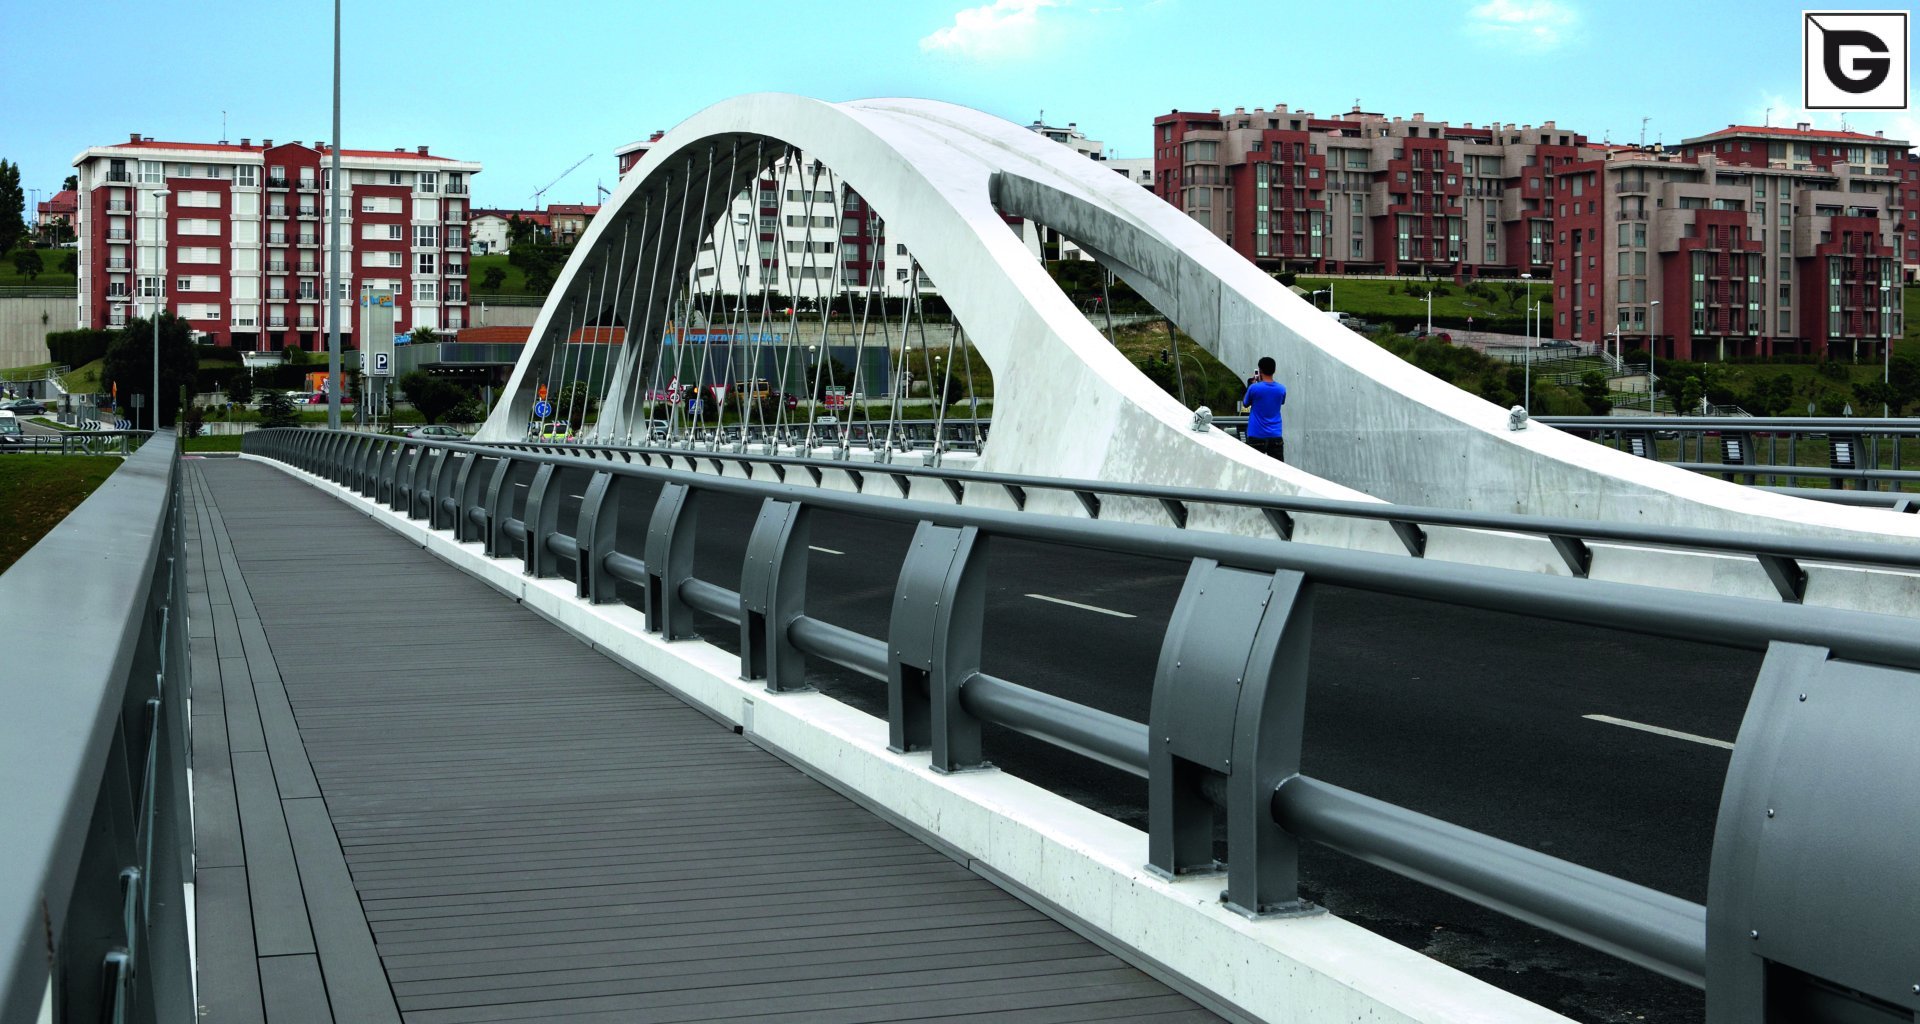 Transport-Einrichtungen_Brücken, Rampen, Gehweg_Brücke